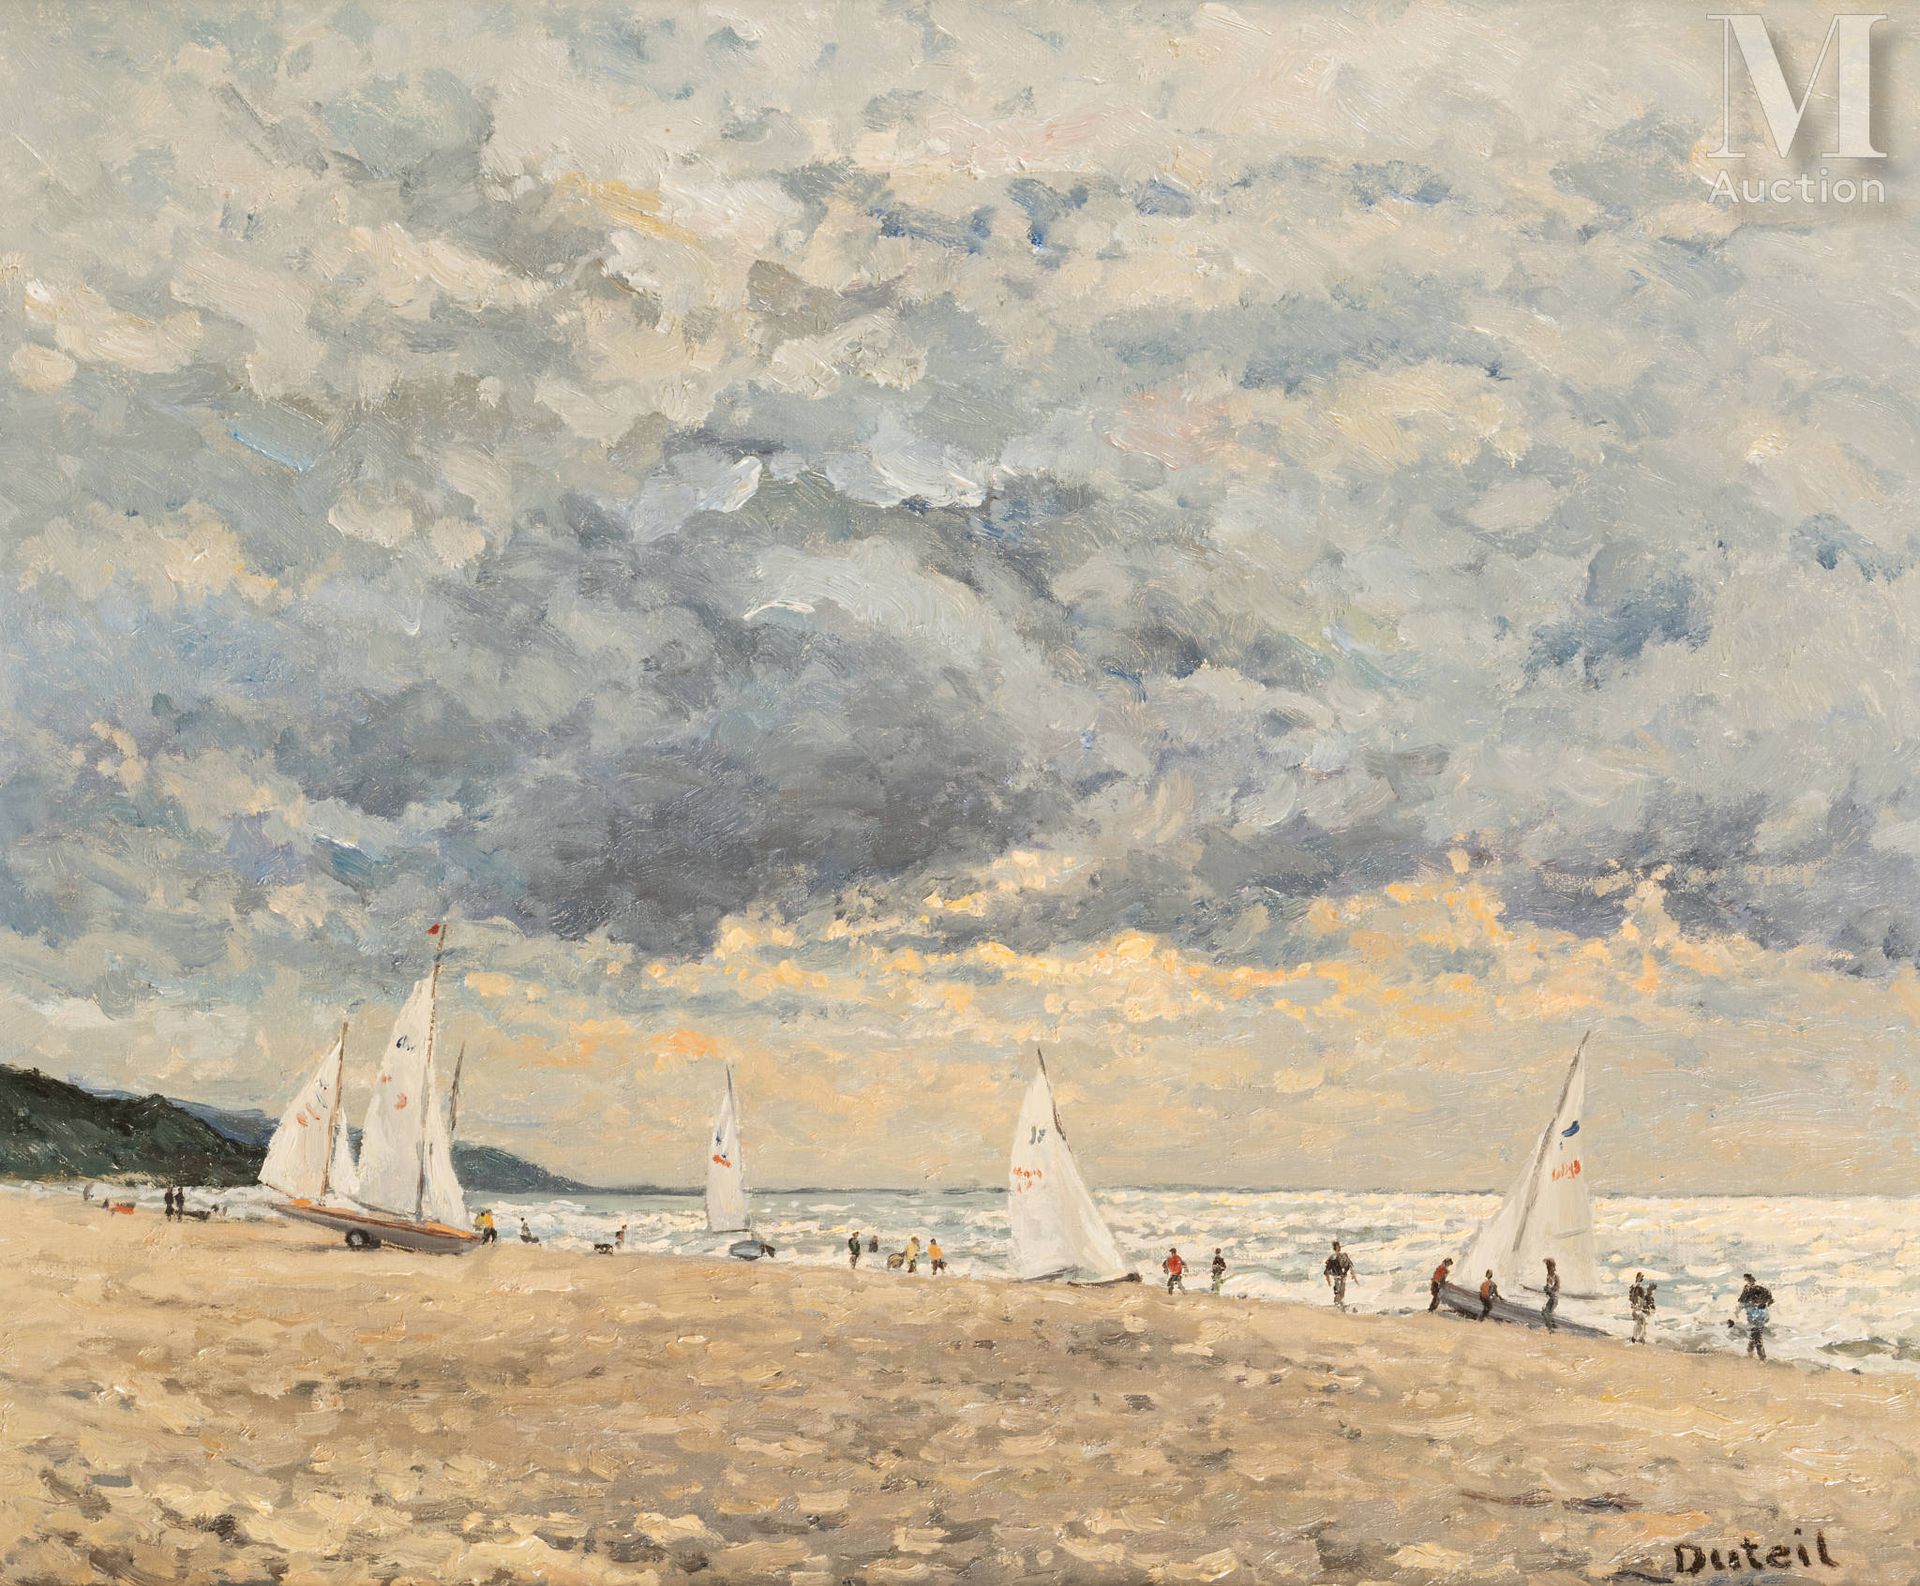 Jean-Claude DUTEIL In controluce sulla spiaggia

Olio su tela 
46,5 x 55 cm
Firm&hellip;